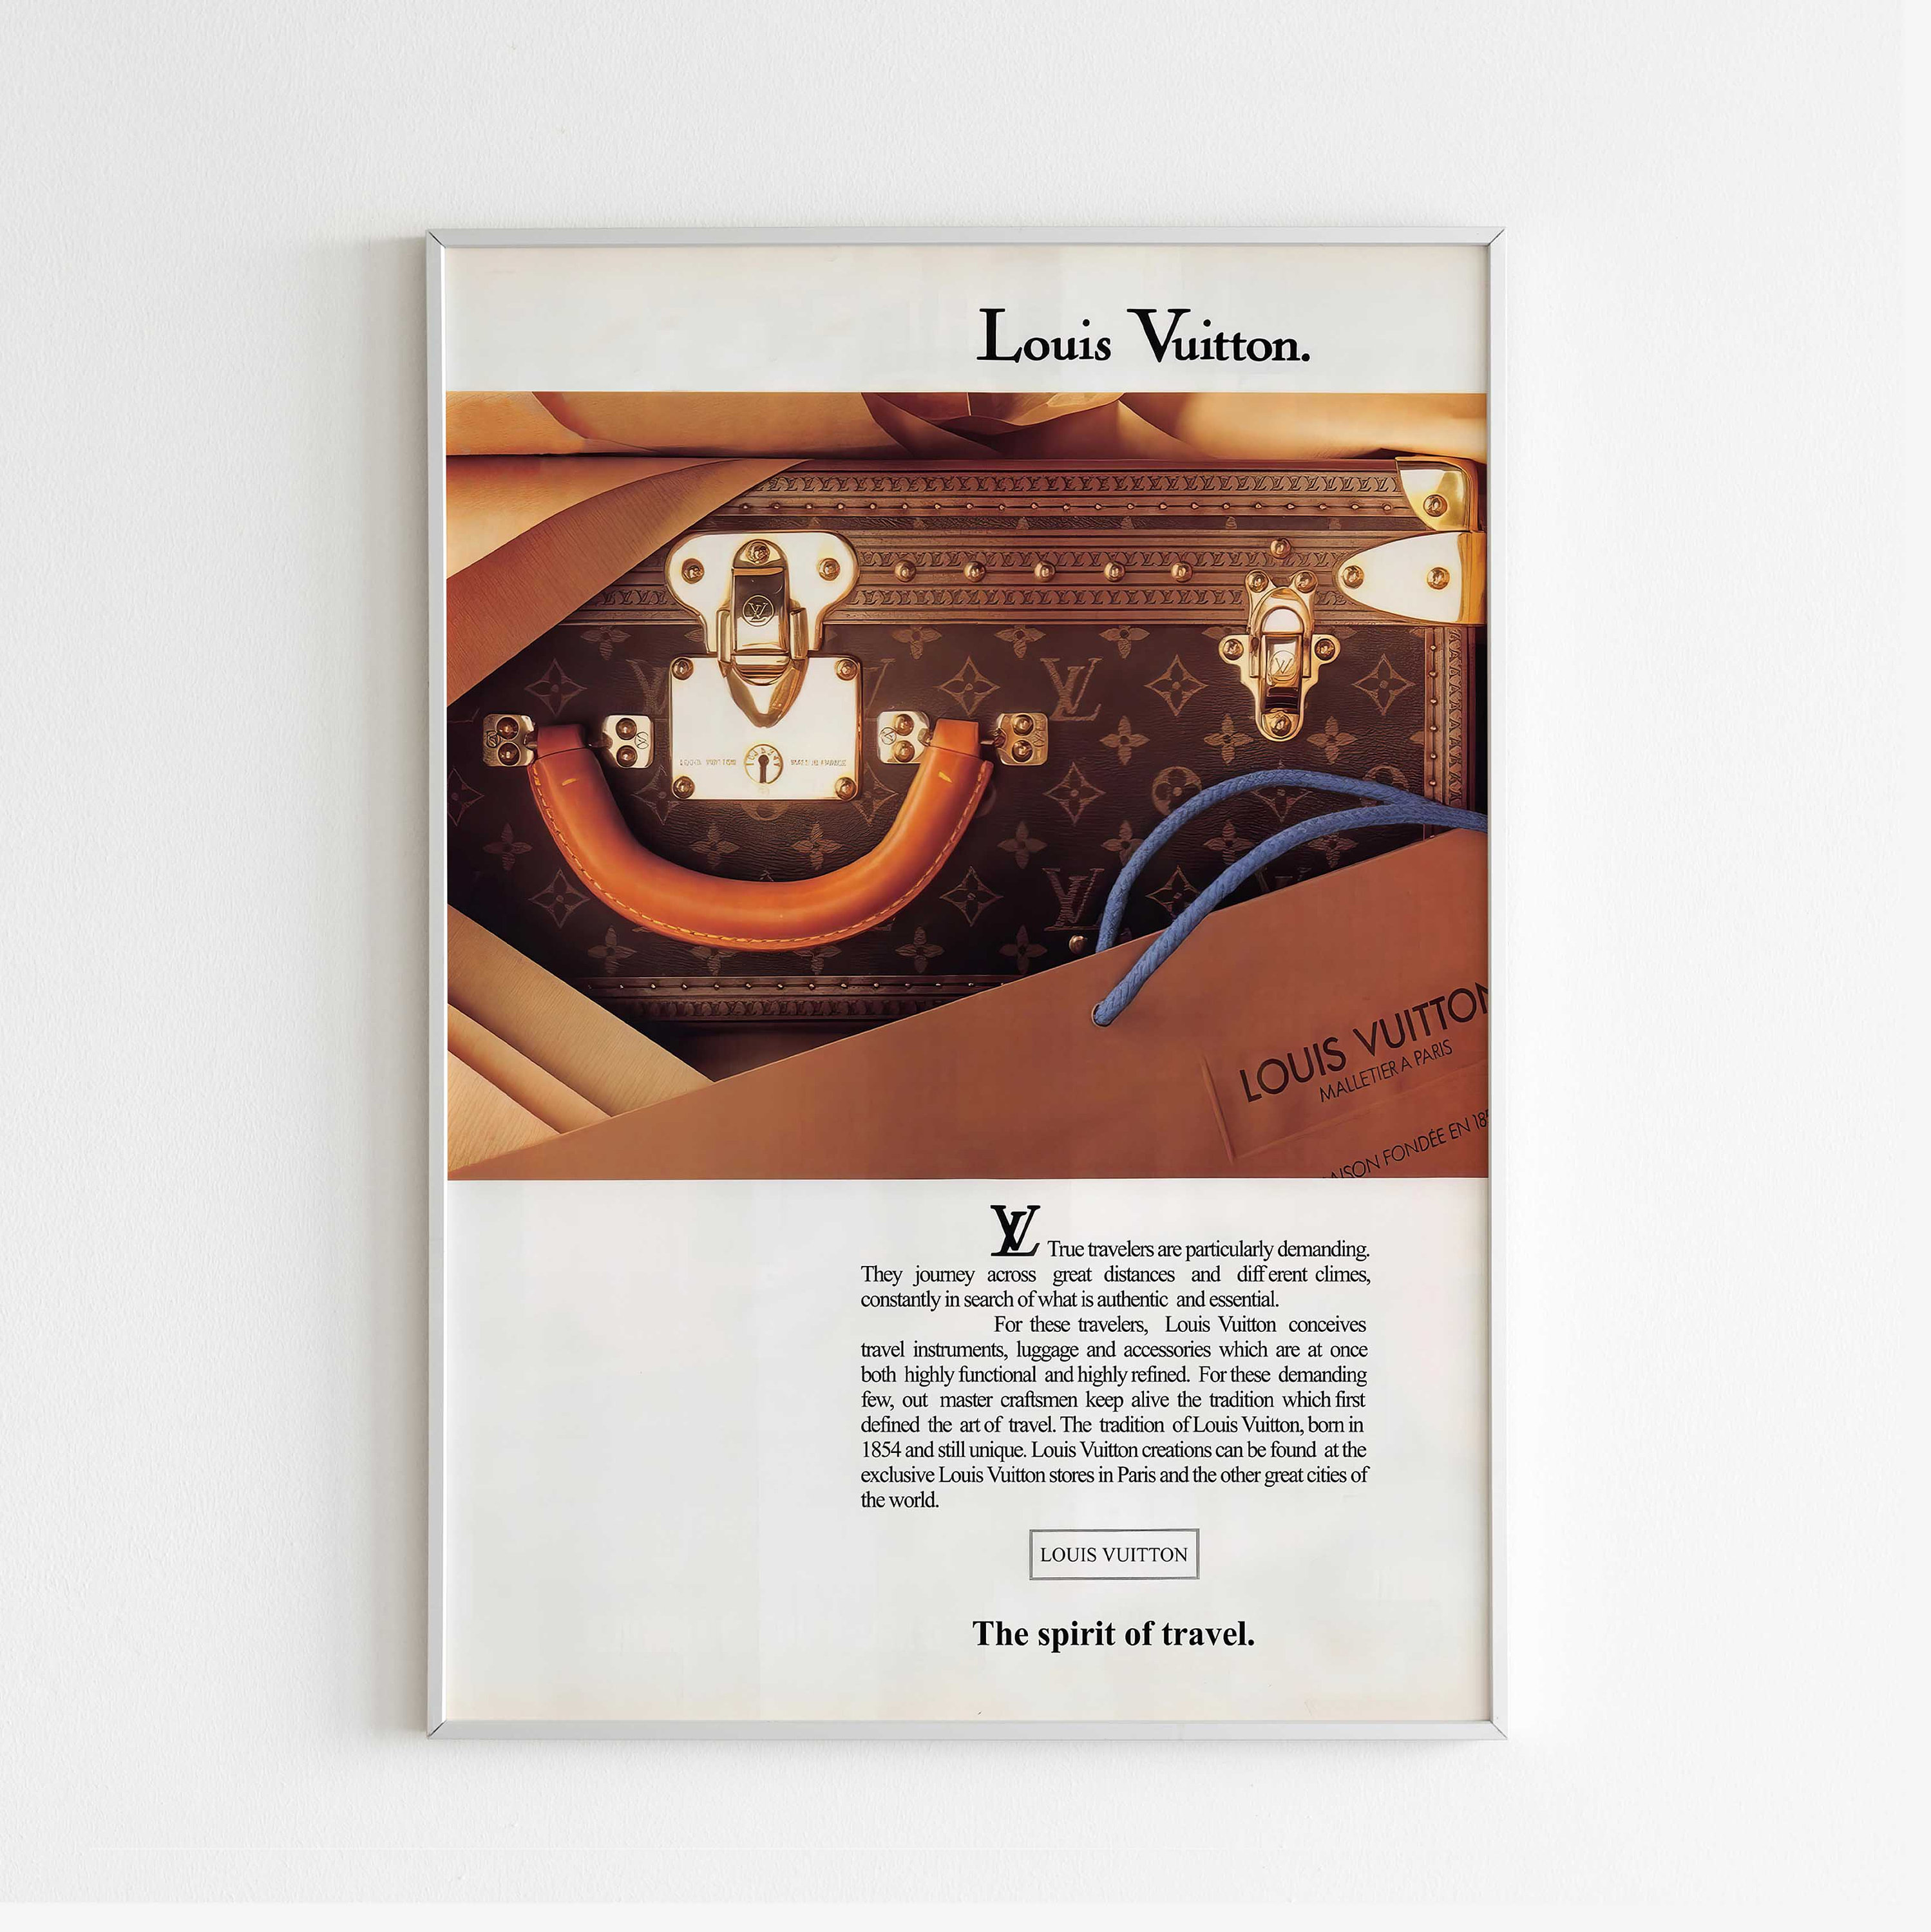 Entra al mundo de Louis Vuitton a través del libro Manufactures